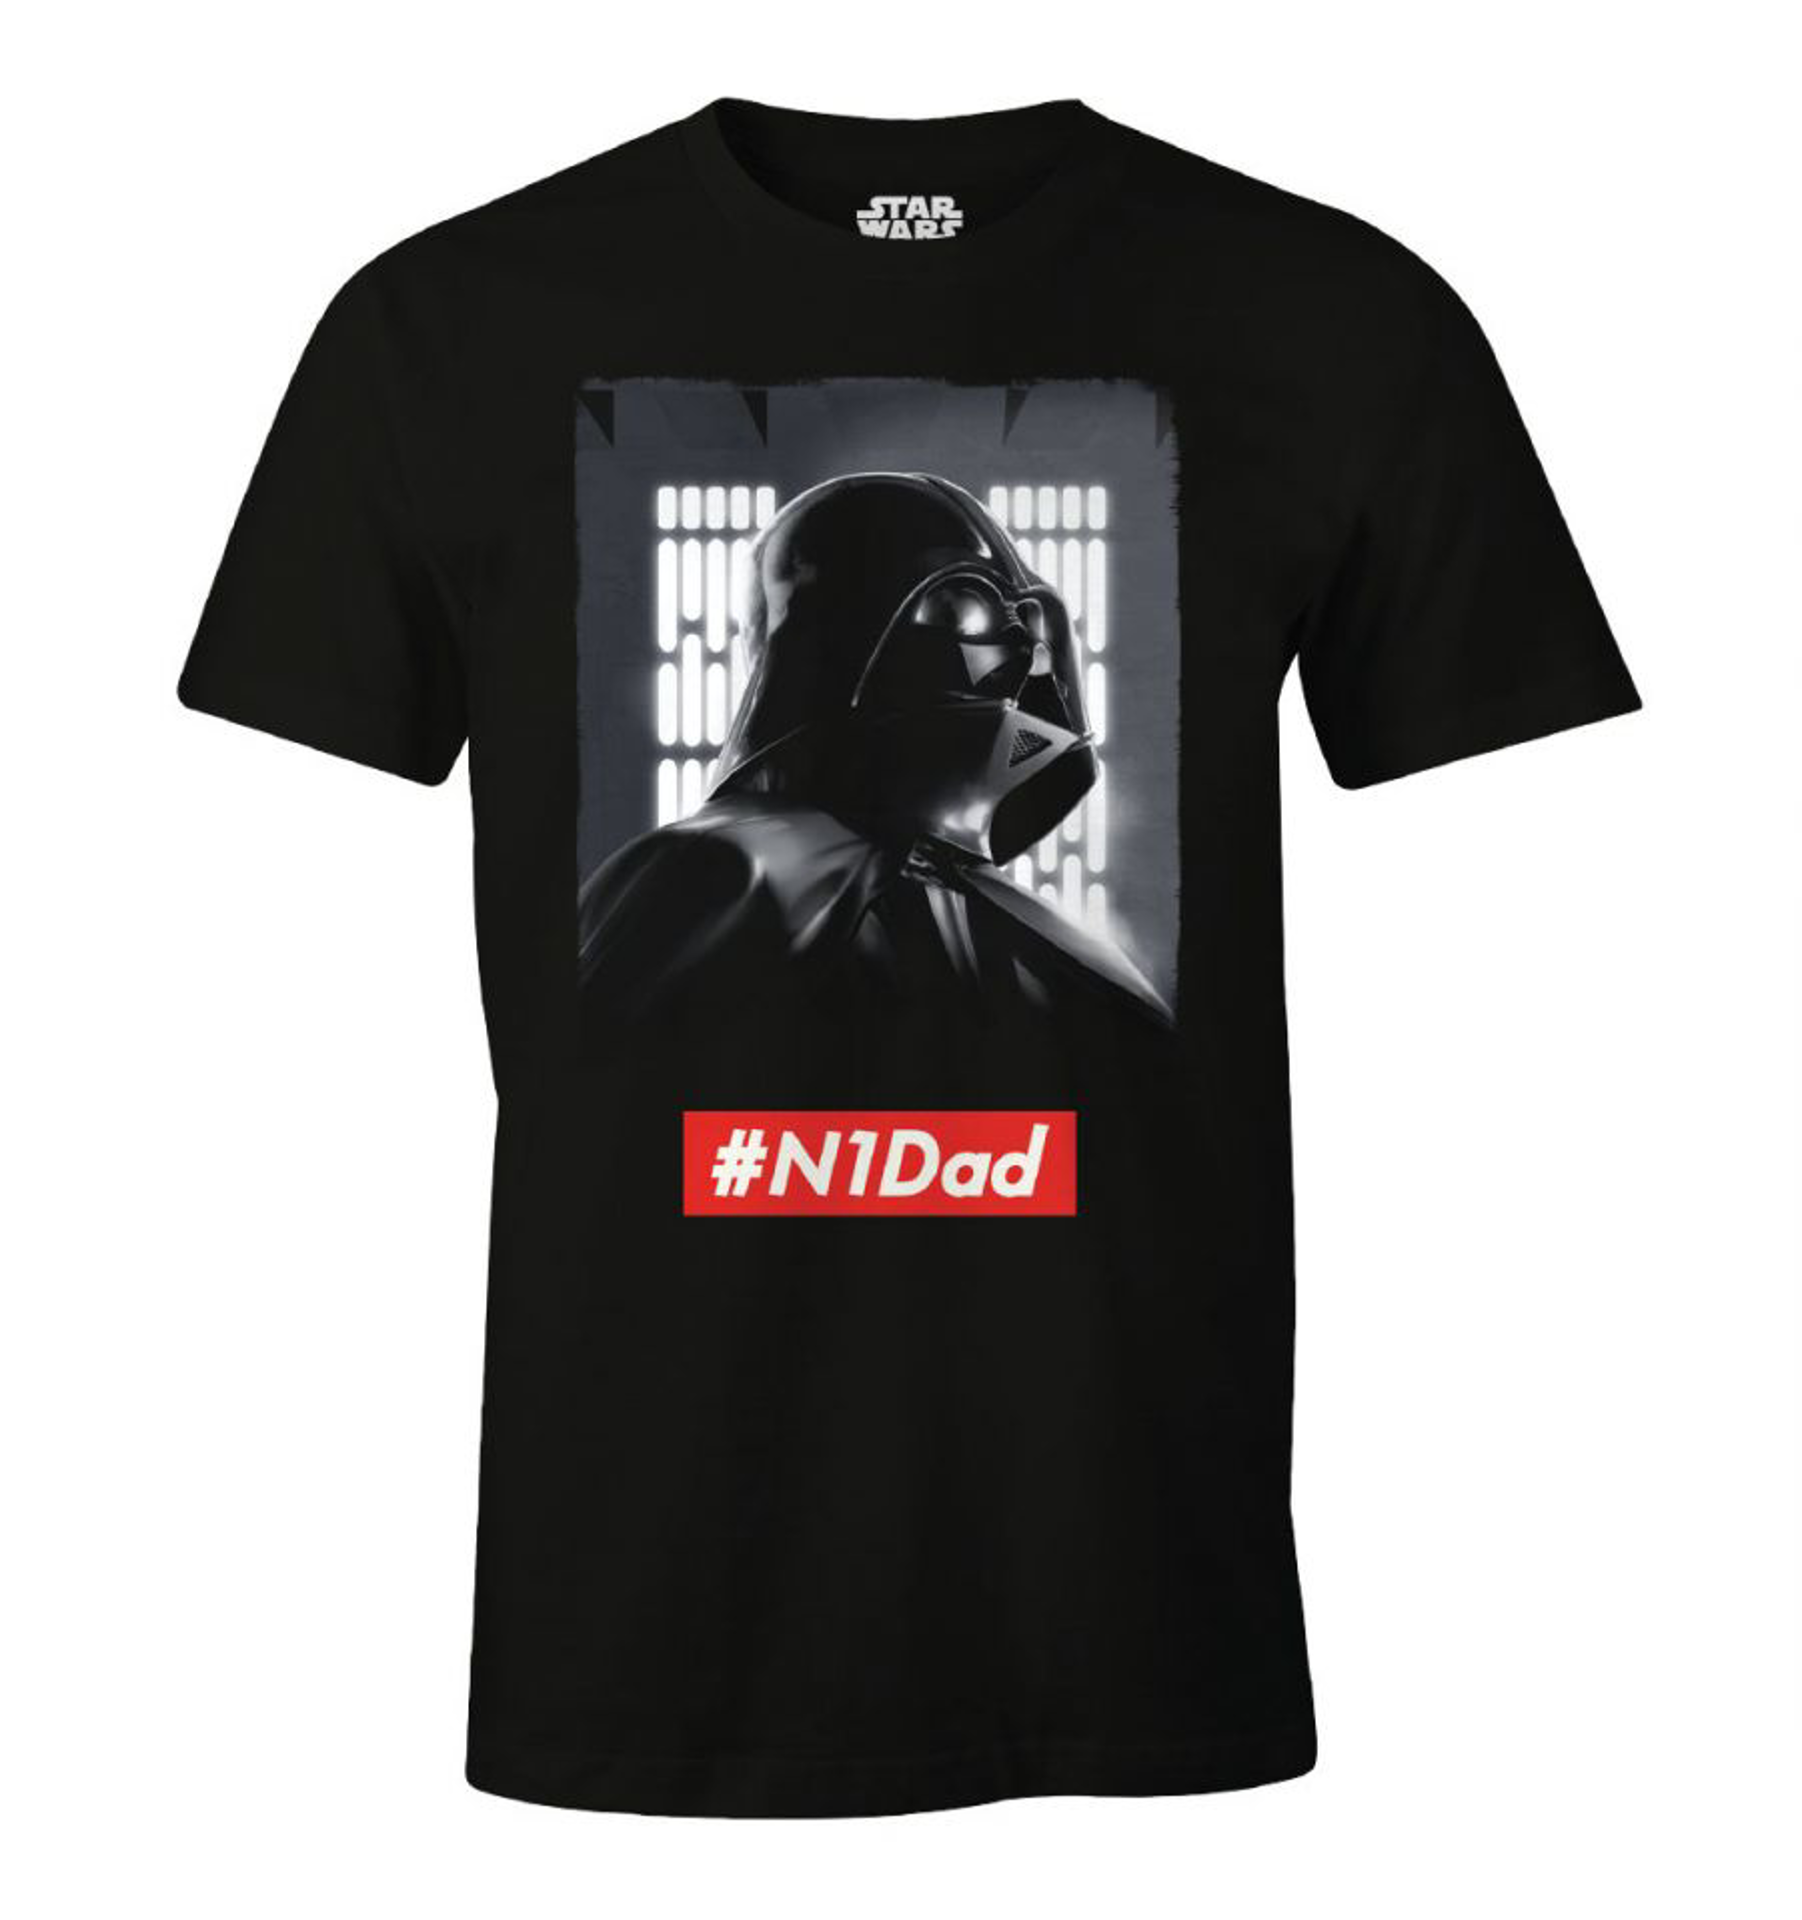 Star Wars - N1Dad Black T-Shirt - XL